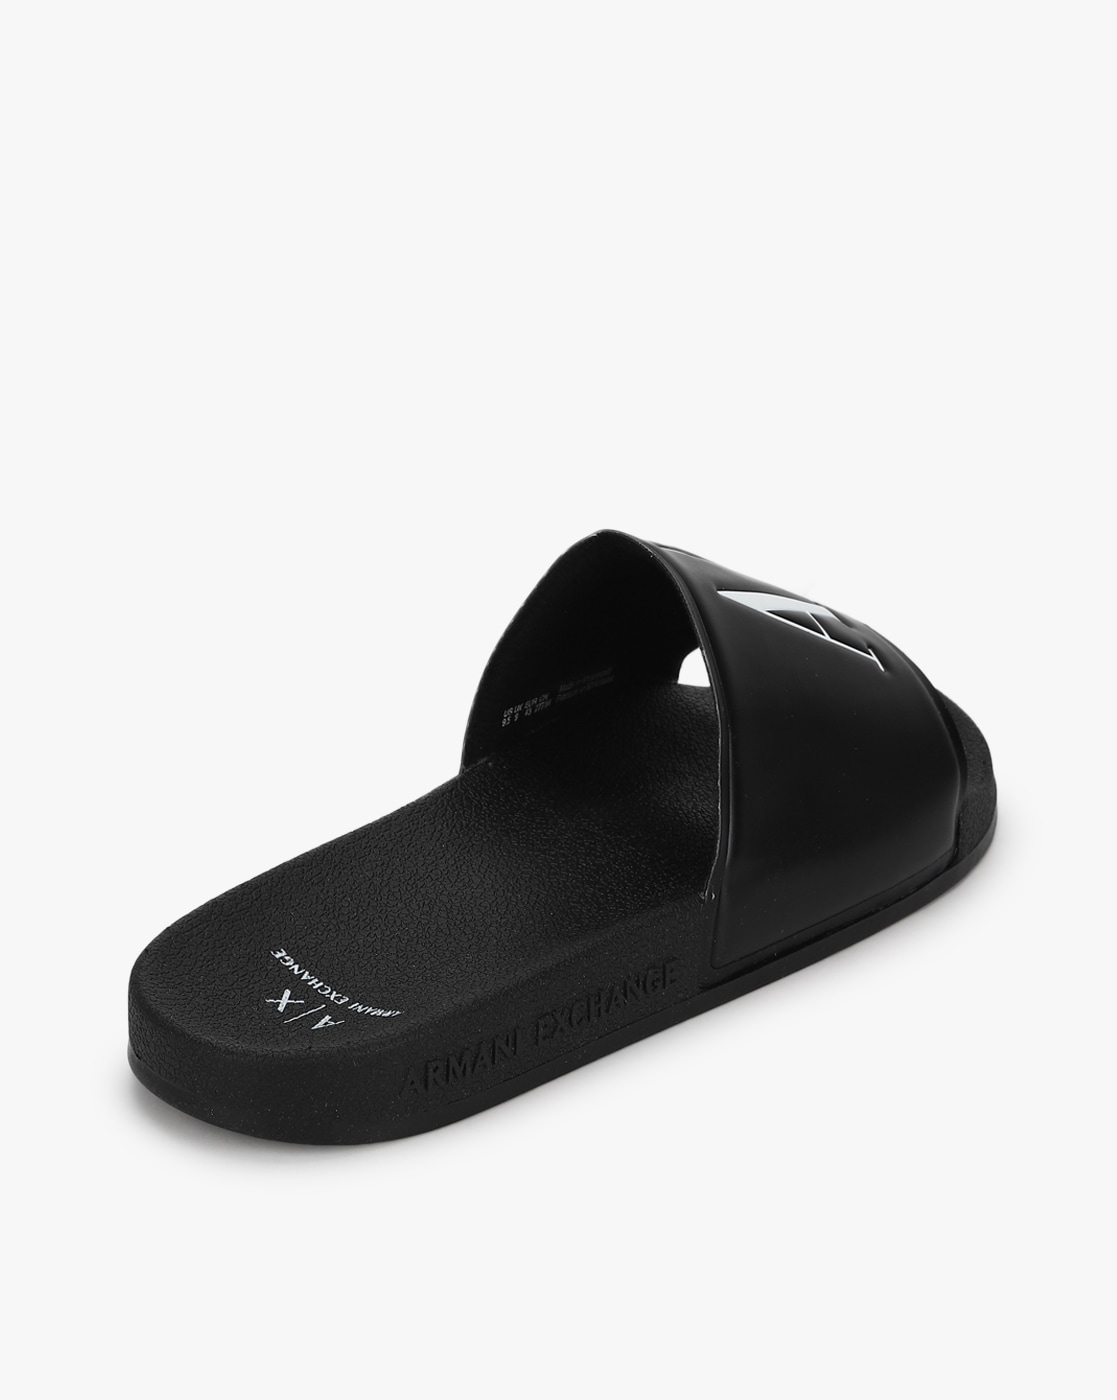 Buy Black Flip Flop & Slippers for Men by ARMANI EXCHANGE Online 